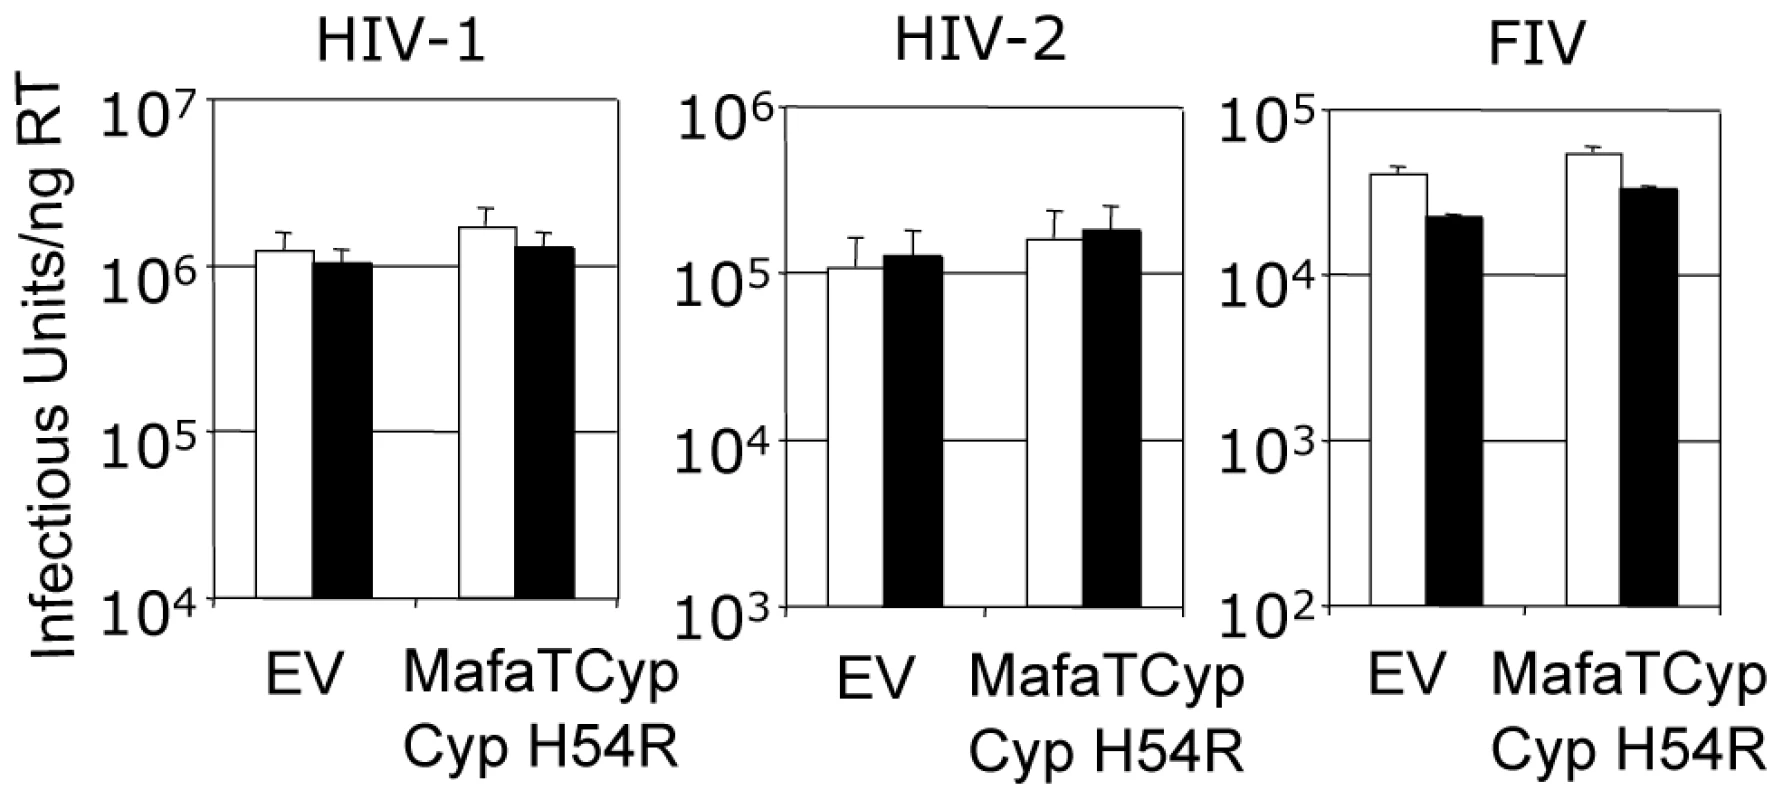 Mutation H54R in the Cyp domain abrogates Mafa TRIMCyp2's antiviral activity against HIV-1 and FIV.